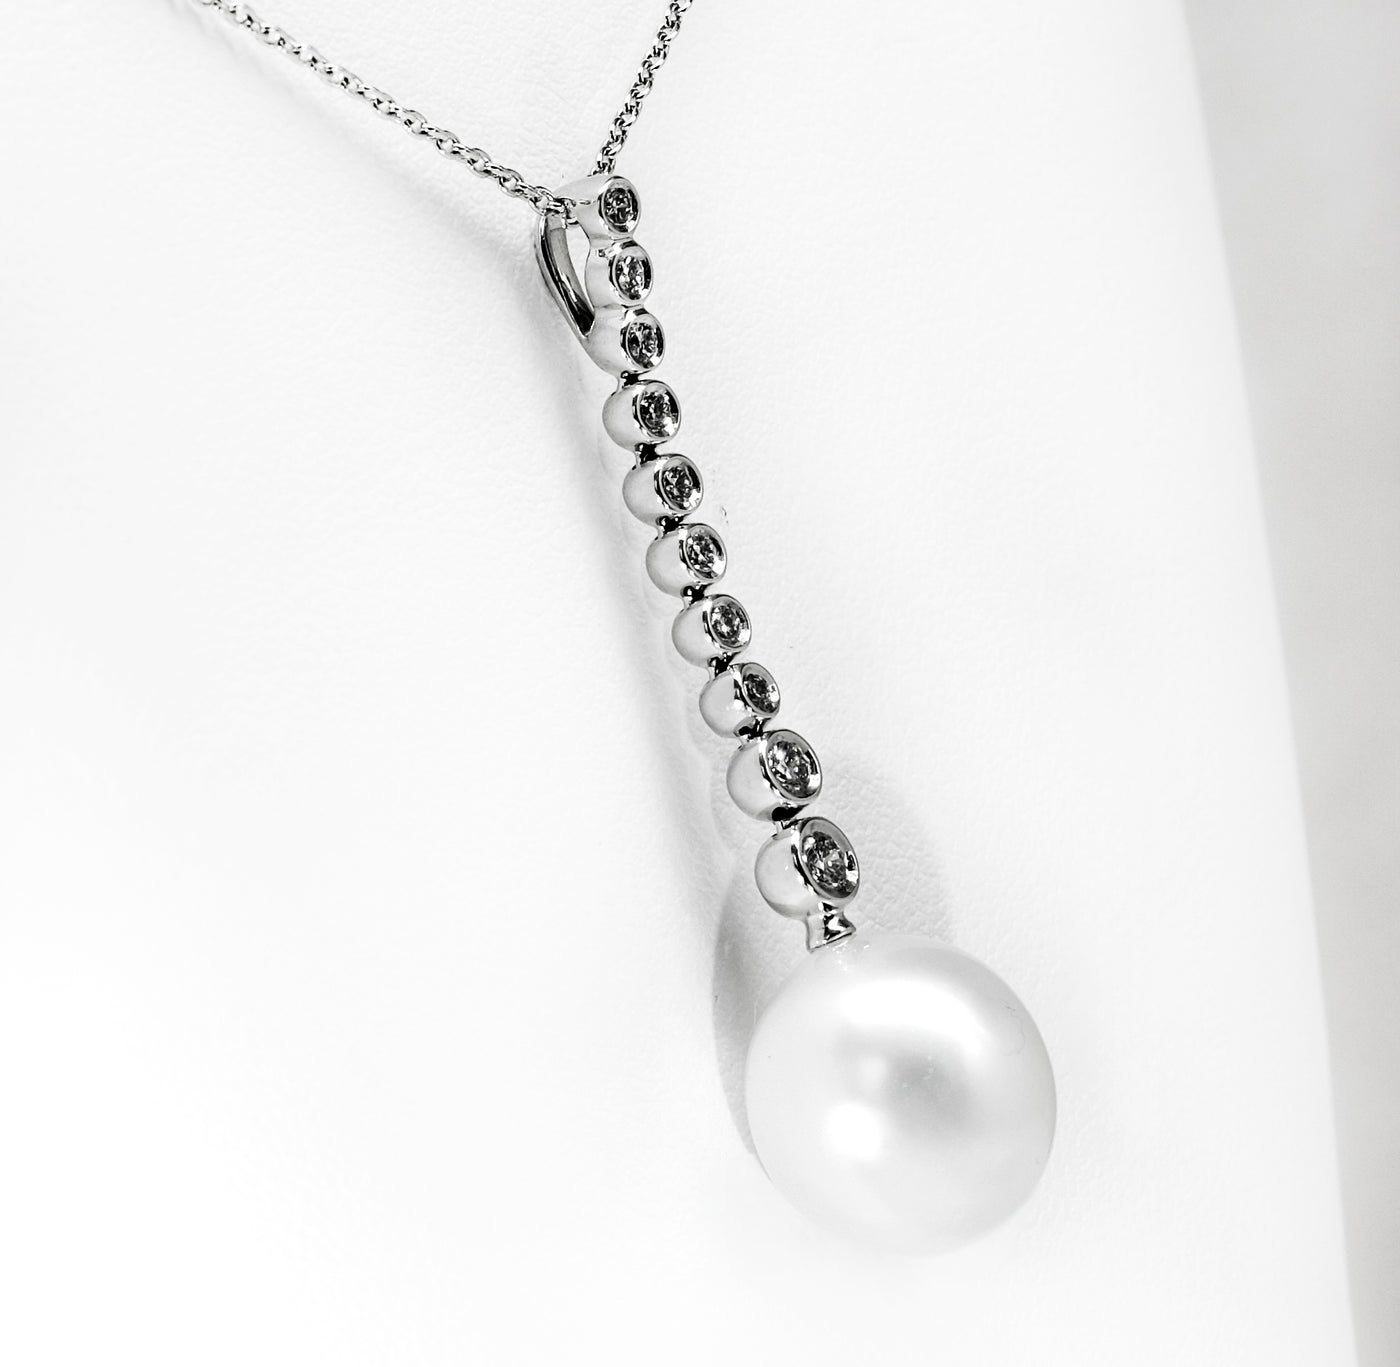 18K White Gold South Sea Pearl & Diamond Pendant